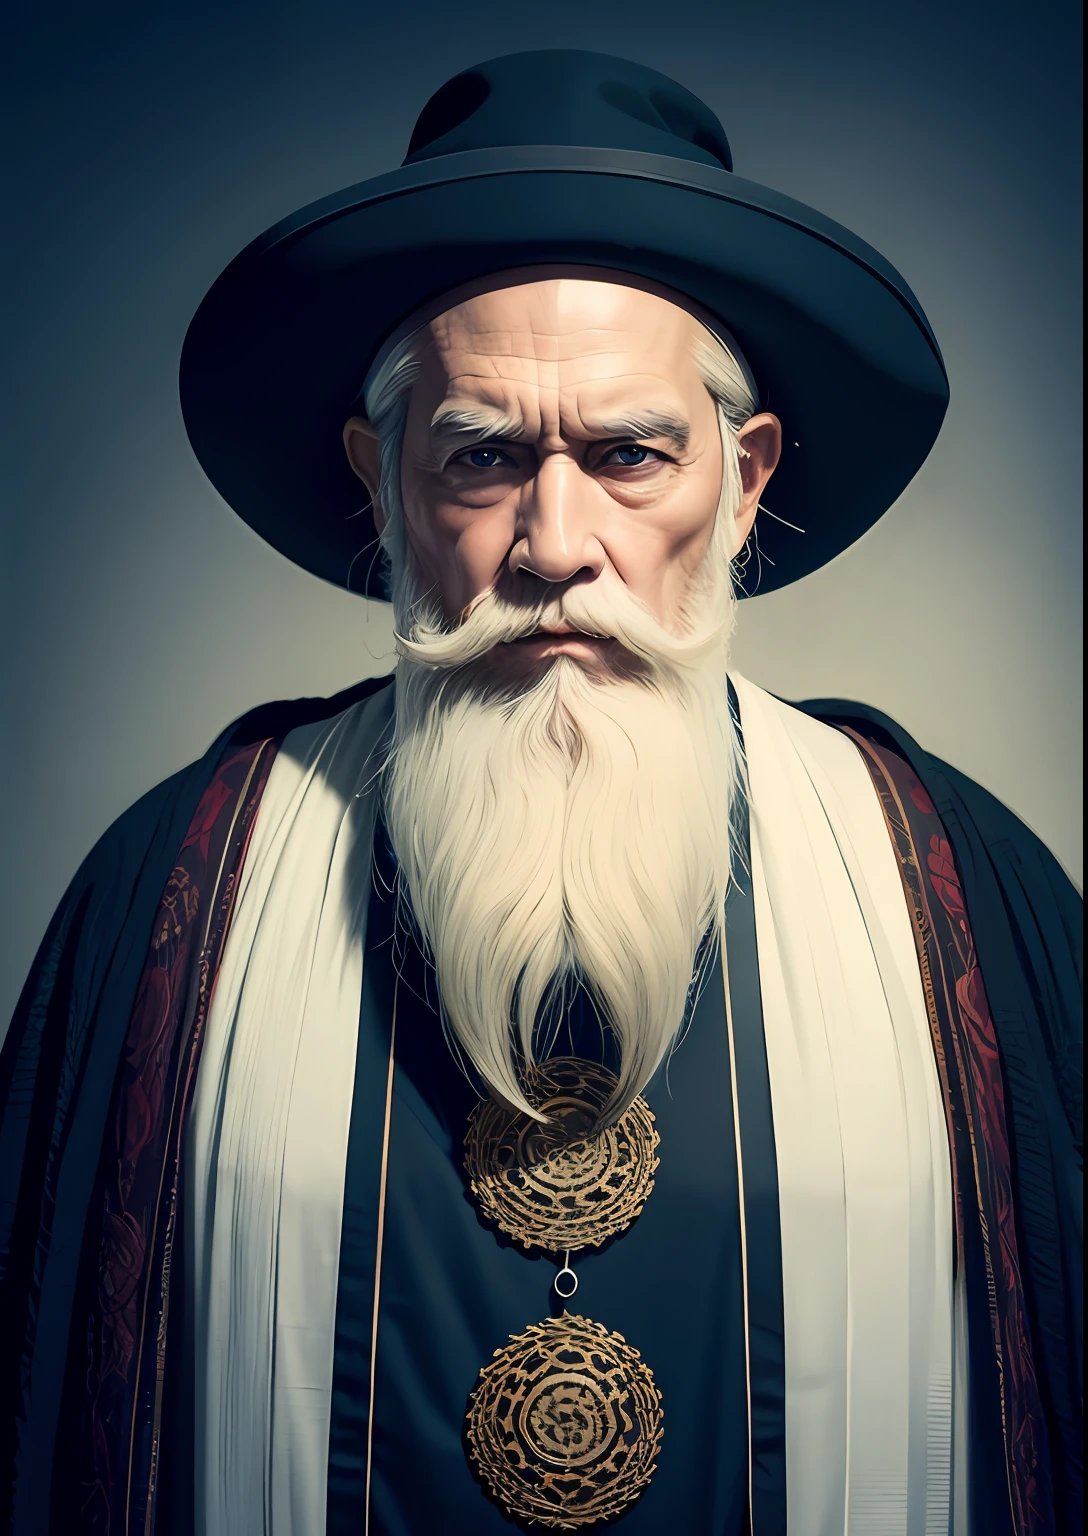 fusionart elderly man, long white beard, black robe, intricate designs,fantansy